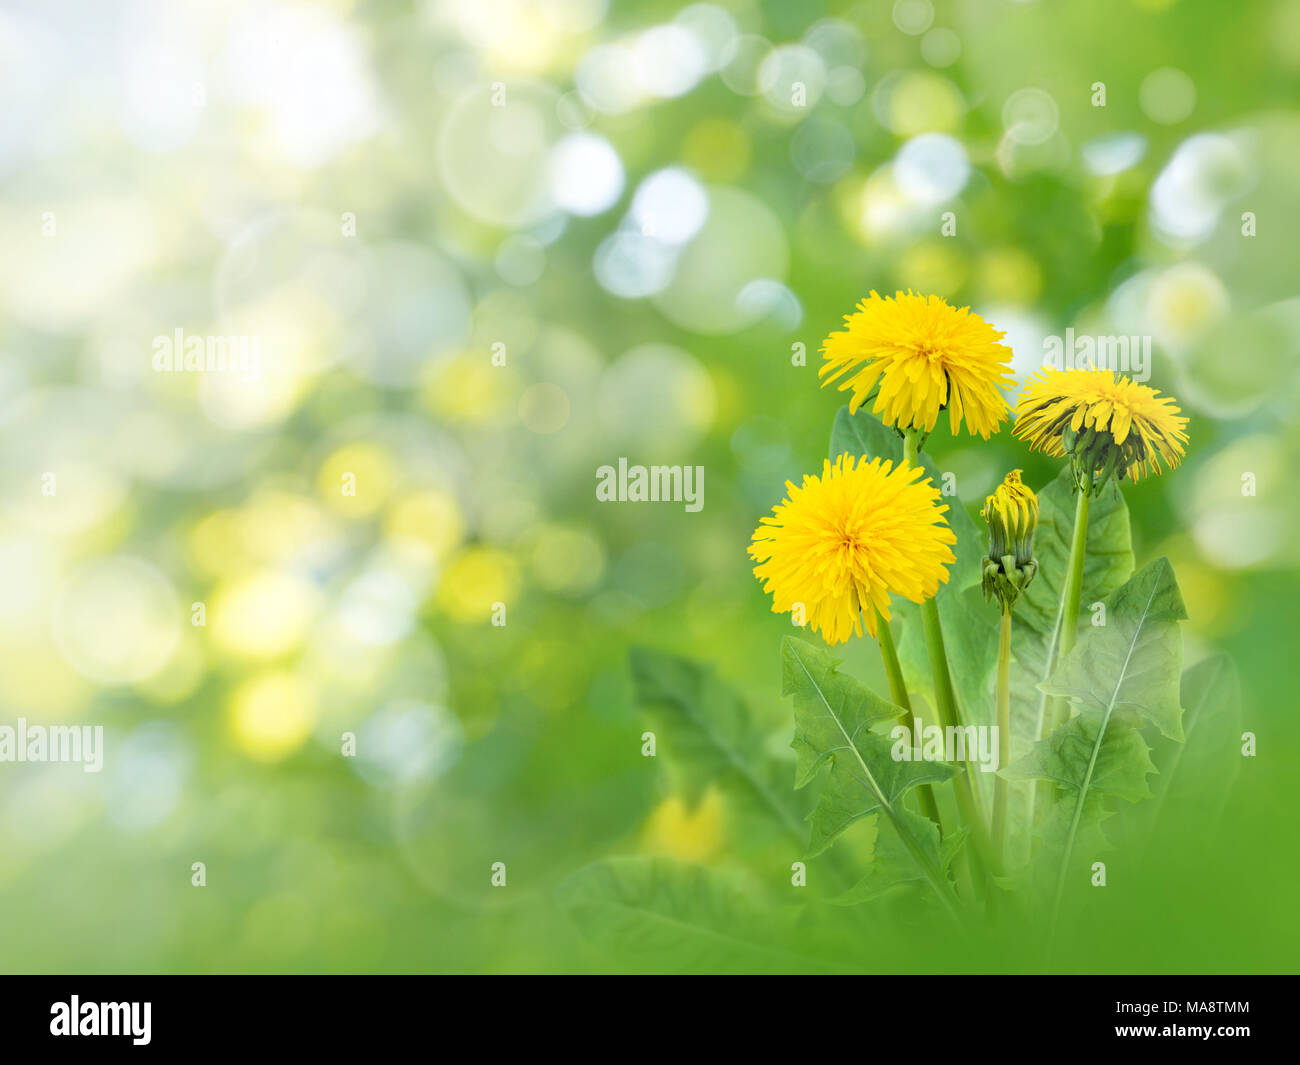 https://c8.alamy.com/comp/MA8TMM/dandelion-yellow-flowers-on-the-spring-blurred-garden-background-floral-desktop-MA8TMM.jpg